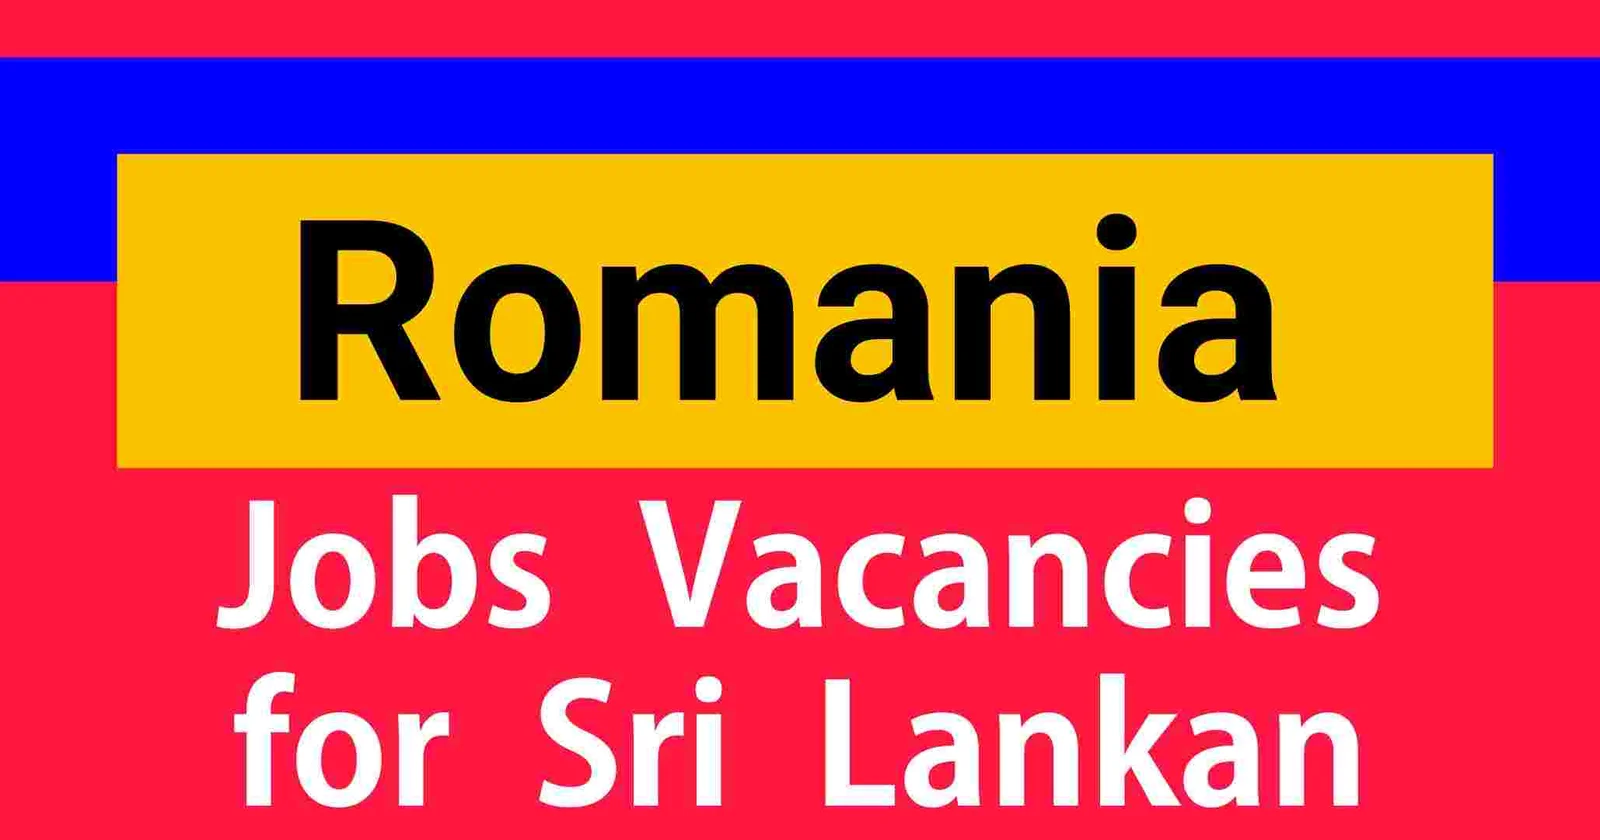 Romania Jobs Vacancies for Sri Lankan